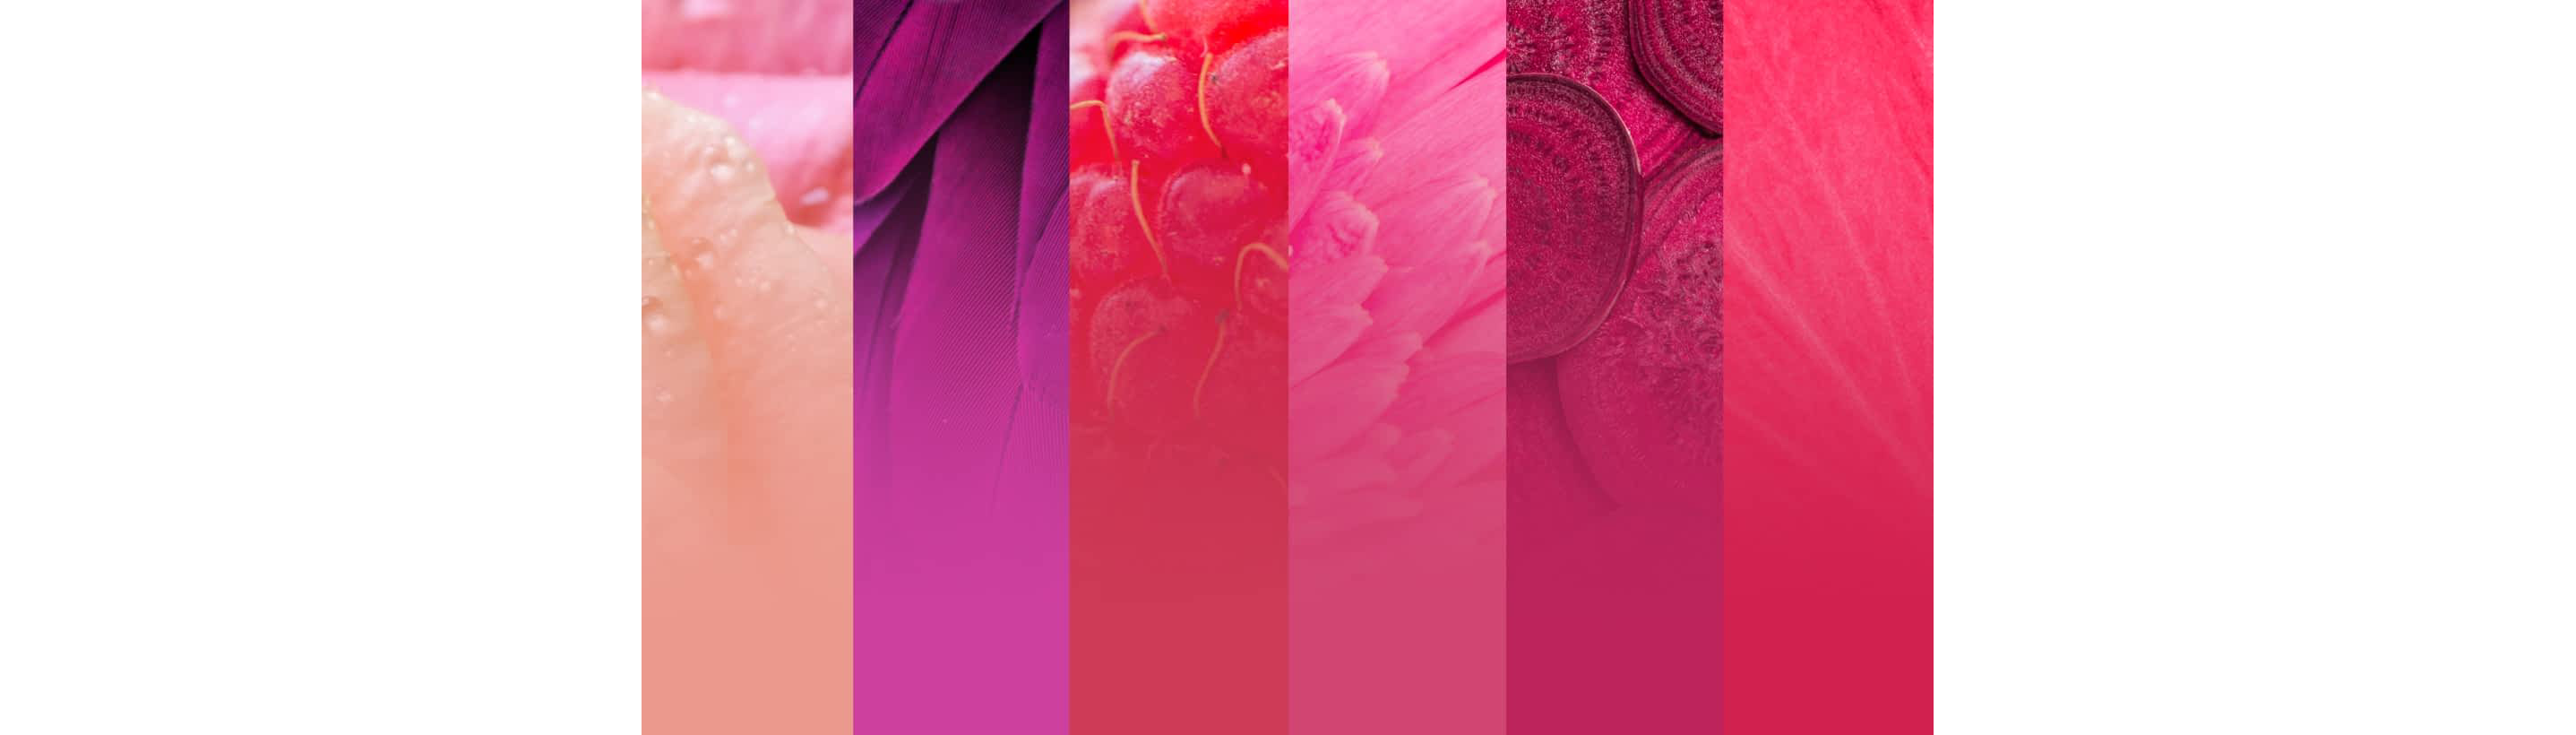 https://kitchenaid-h.assetsadobe.com/is/image/content/dam/business-unit/kitchenaid/en-us/digital-assets/pages/color-of-the-year-2023/color-inspiration/study-in-pink.jpg?fit=constrain&fmt=png-alpha&wid=2875